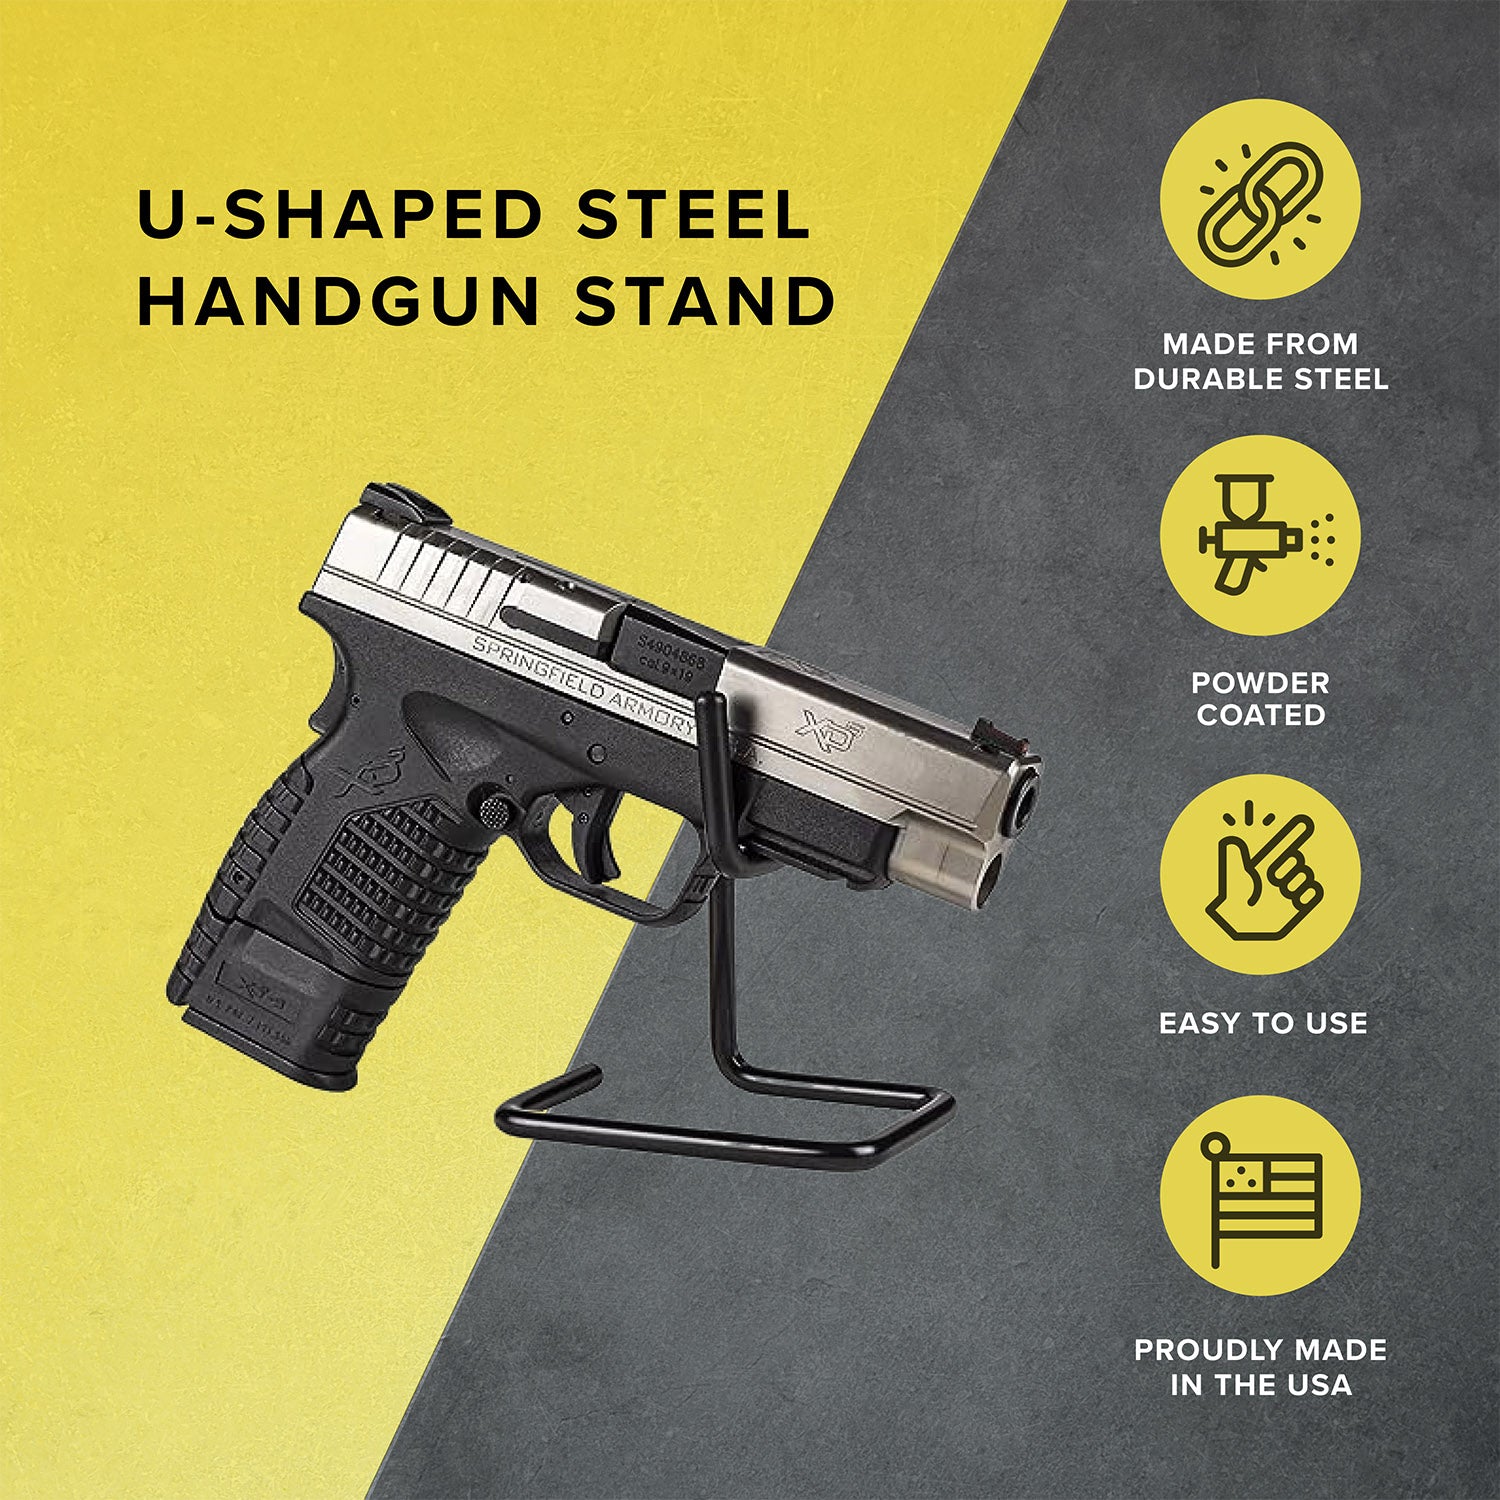 Universal Semi Auto & Revolver Hand Gun Stand Pistol Display Powder Coated Steel